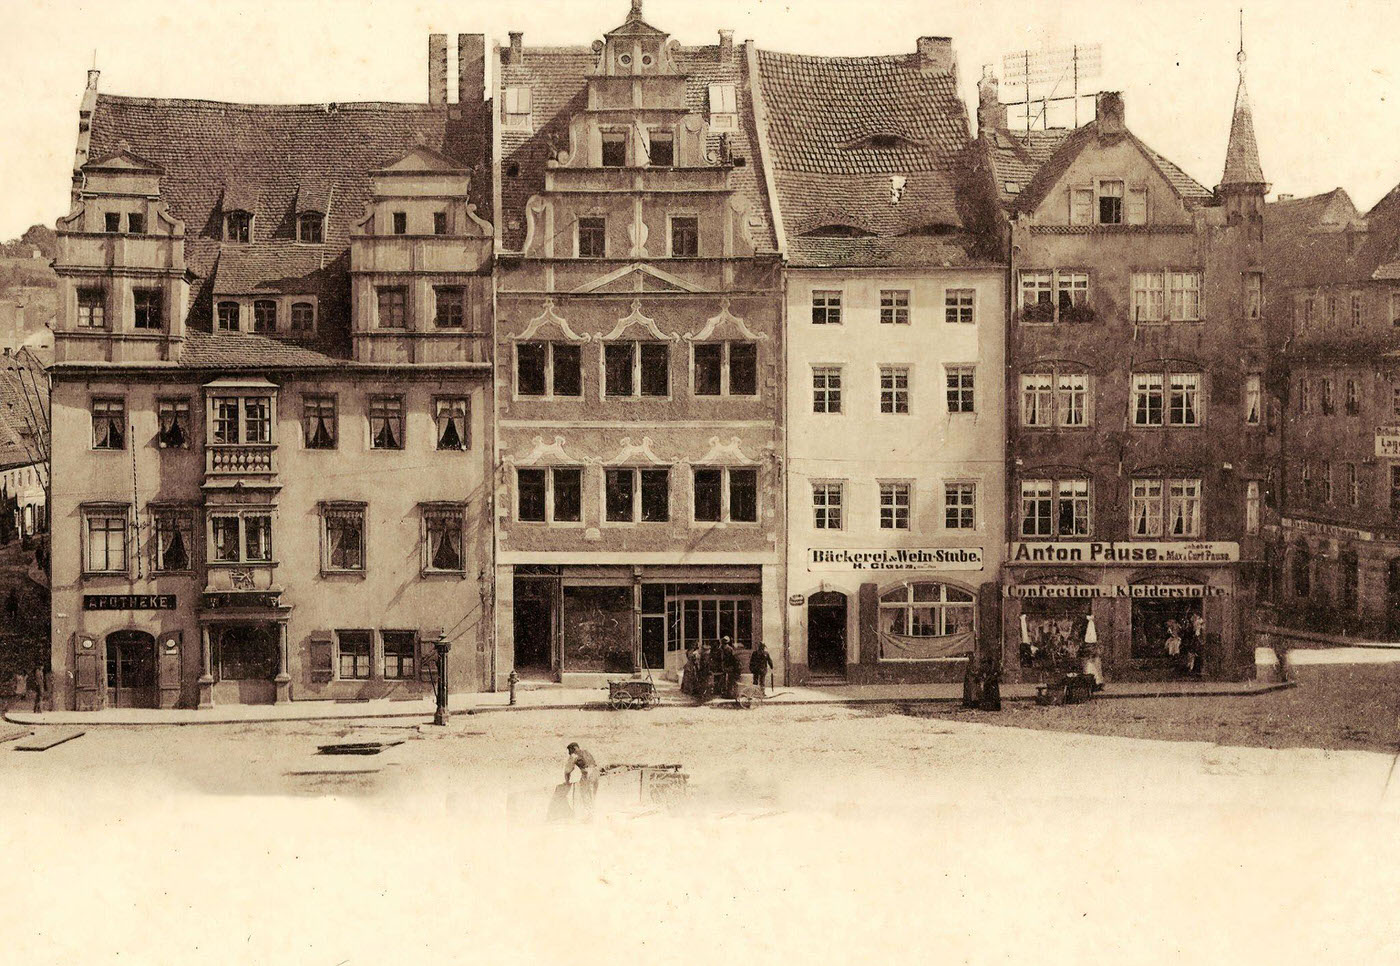 Markt-Apotheke in Meissen, Bakeries, Shops, 1900s, Germany.